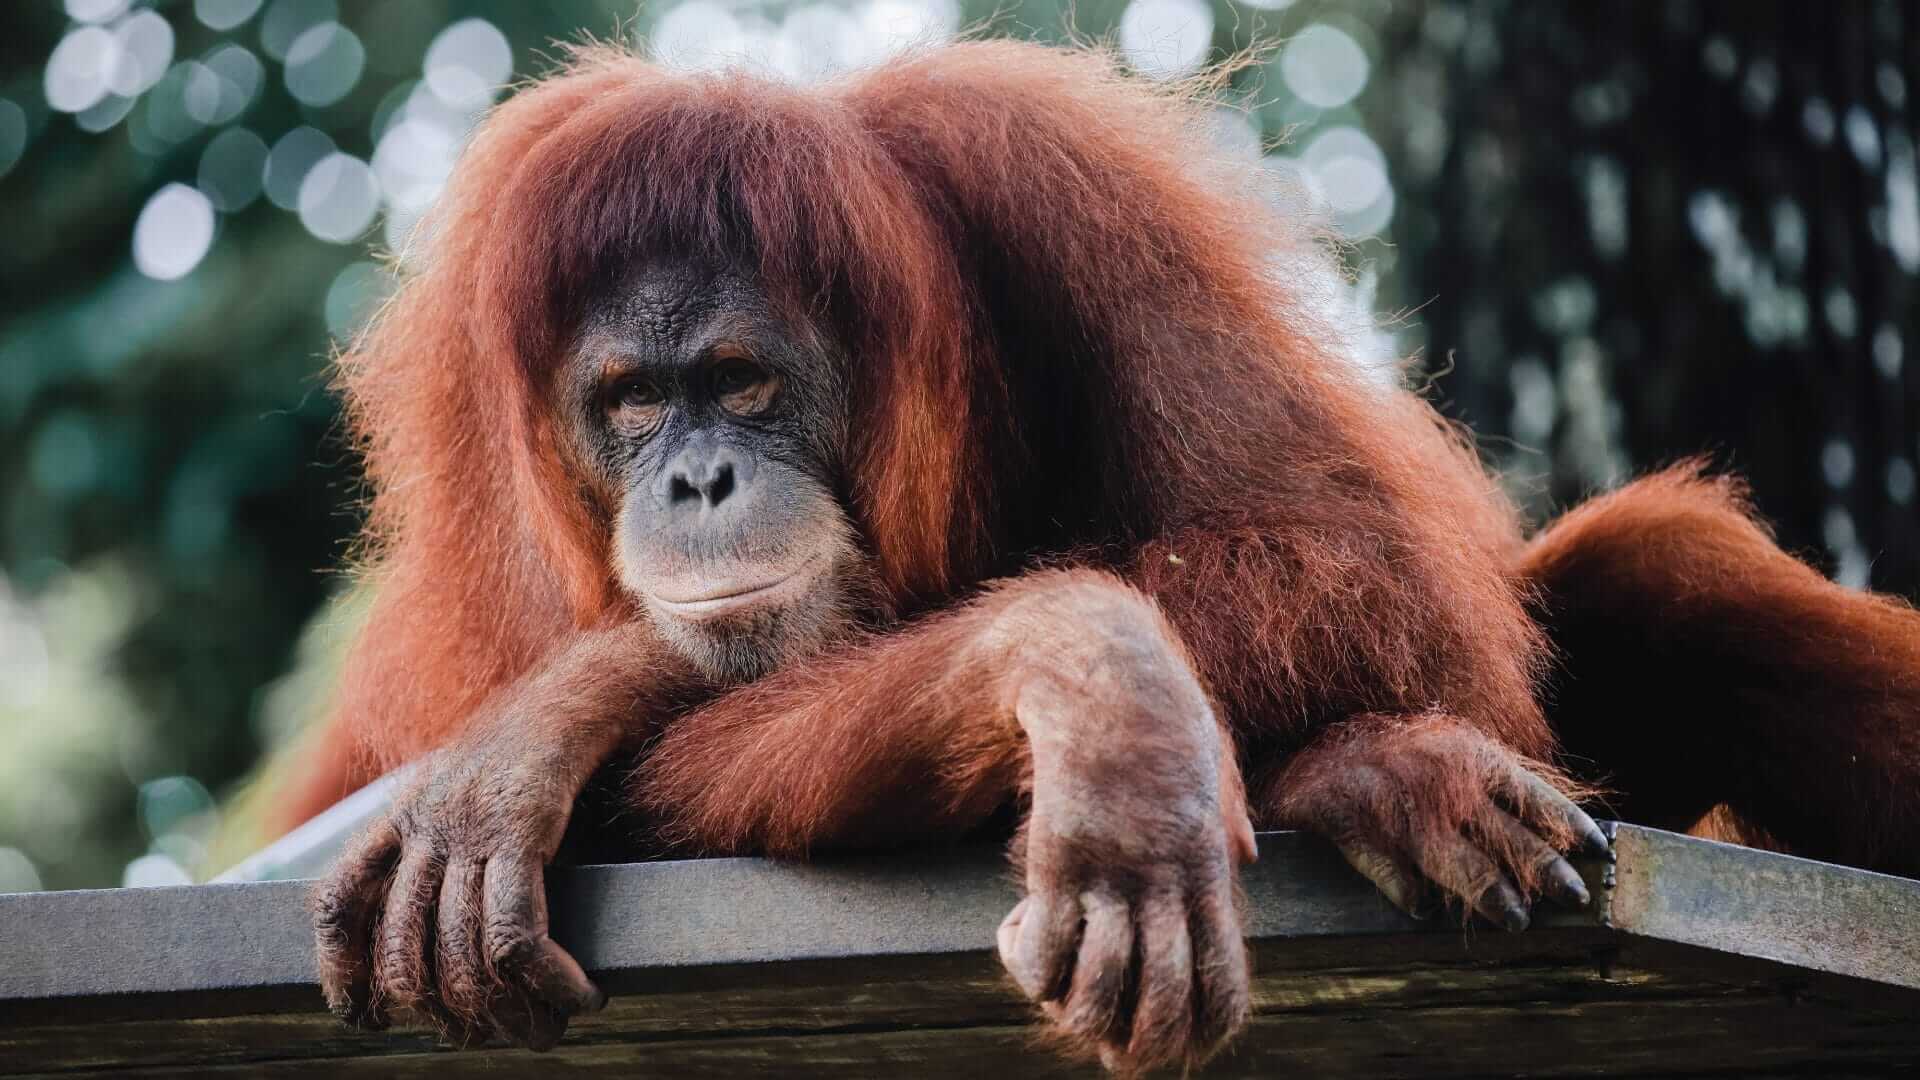 Photo of an orangutan